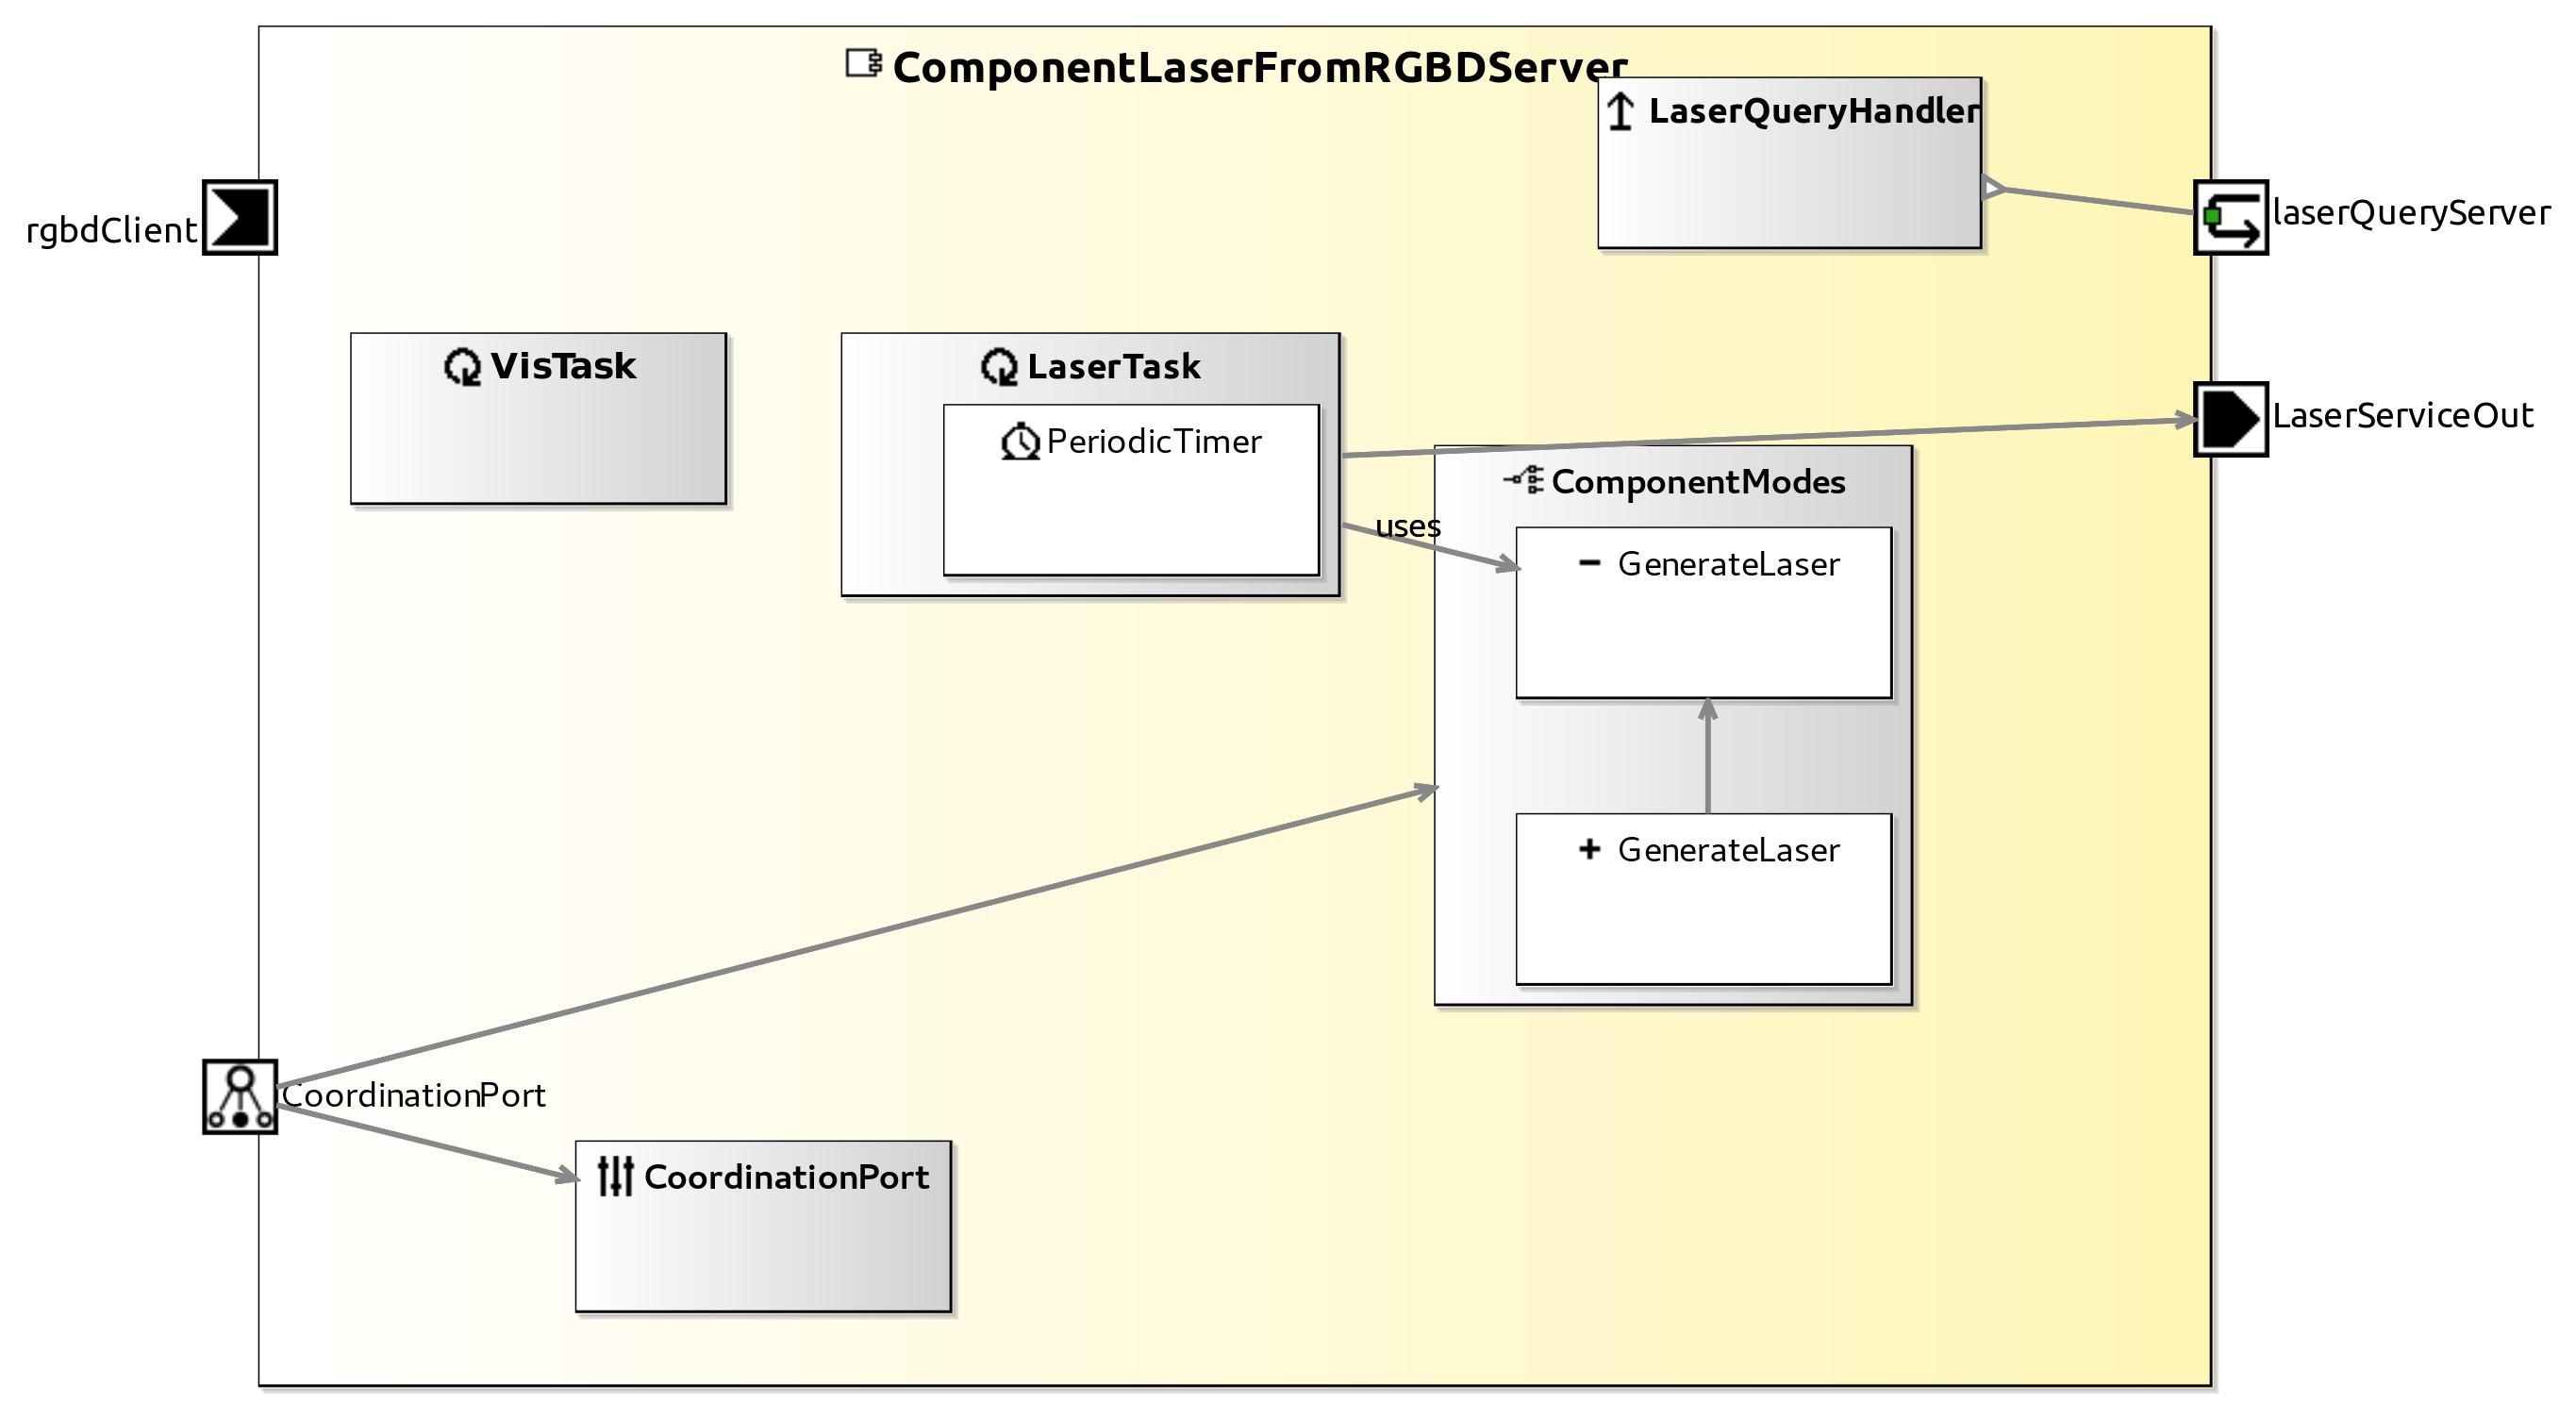 raw.githubusercontent.com_servicerobotics-ulm_componentrepository_master_componentlaserfromrgbdserver_model_componentlaserfromrgbdservercomponentdefinition.jpg